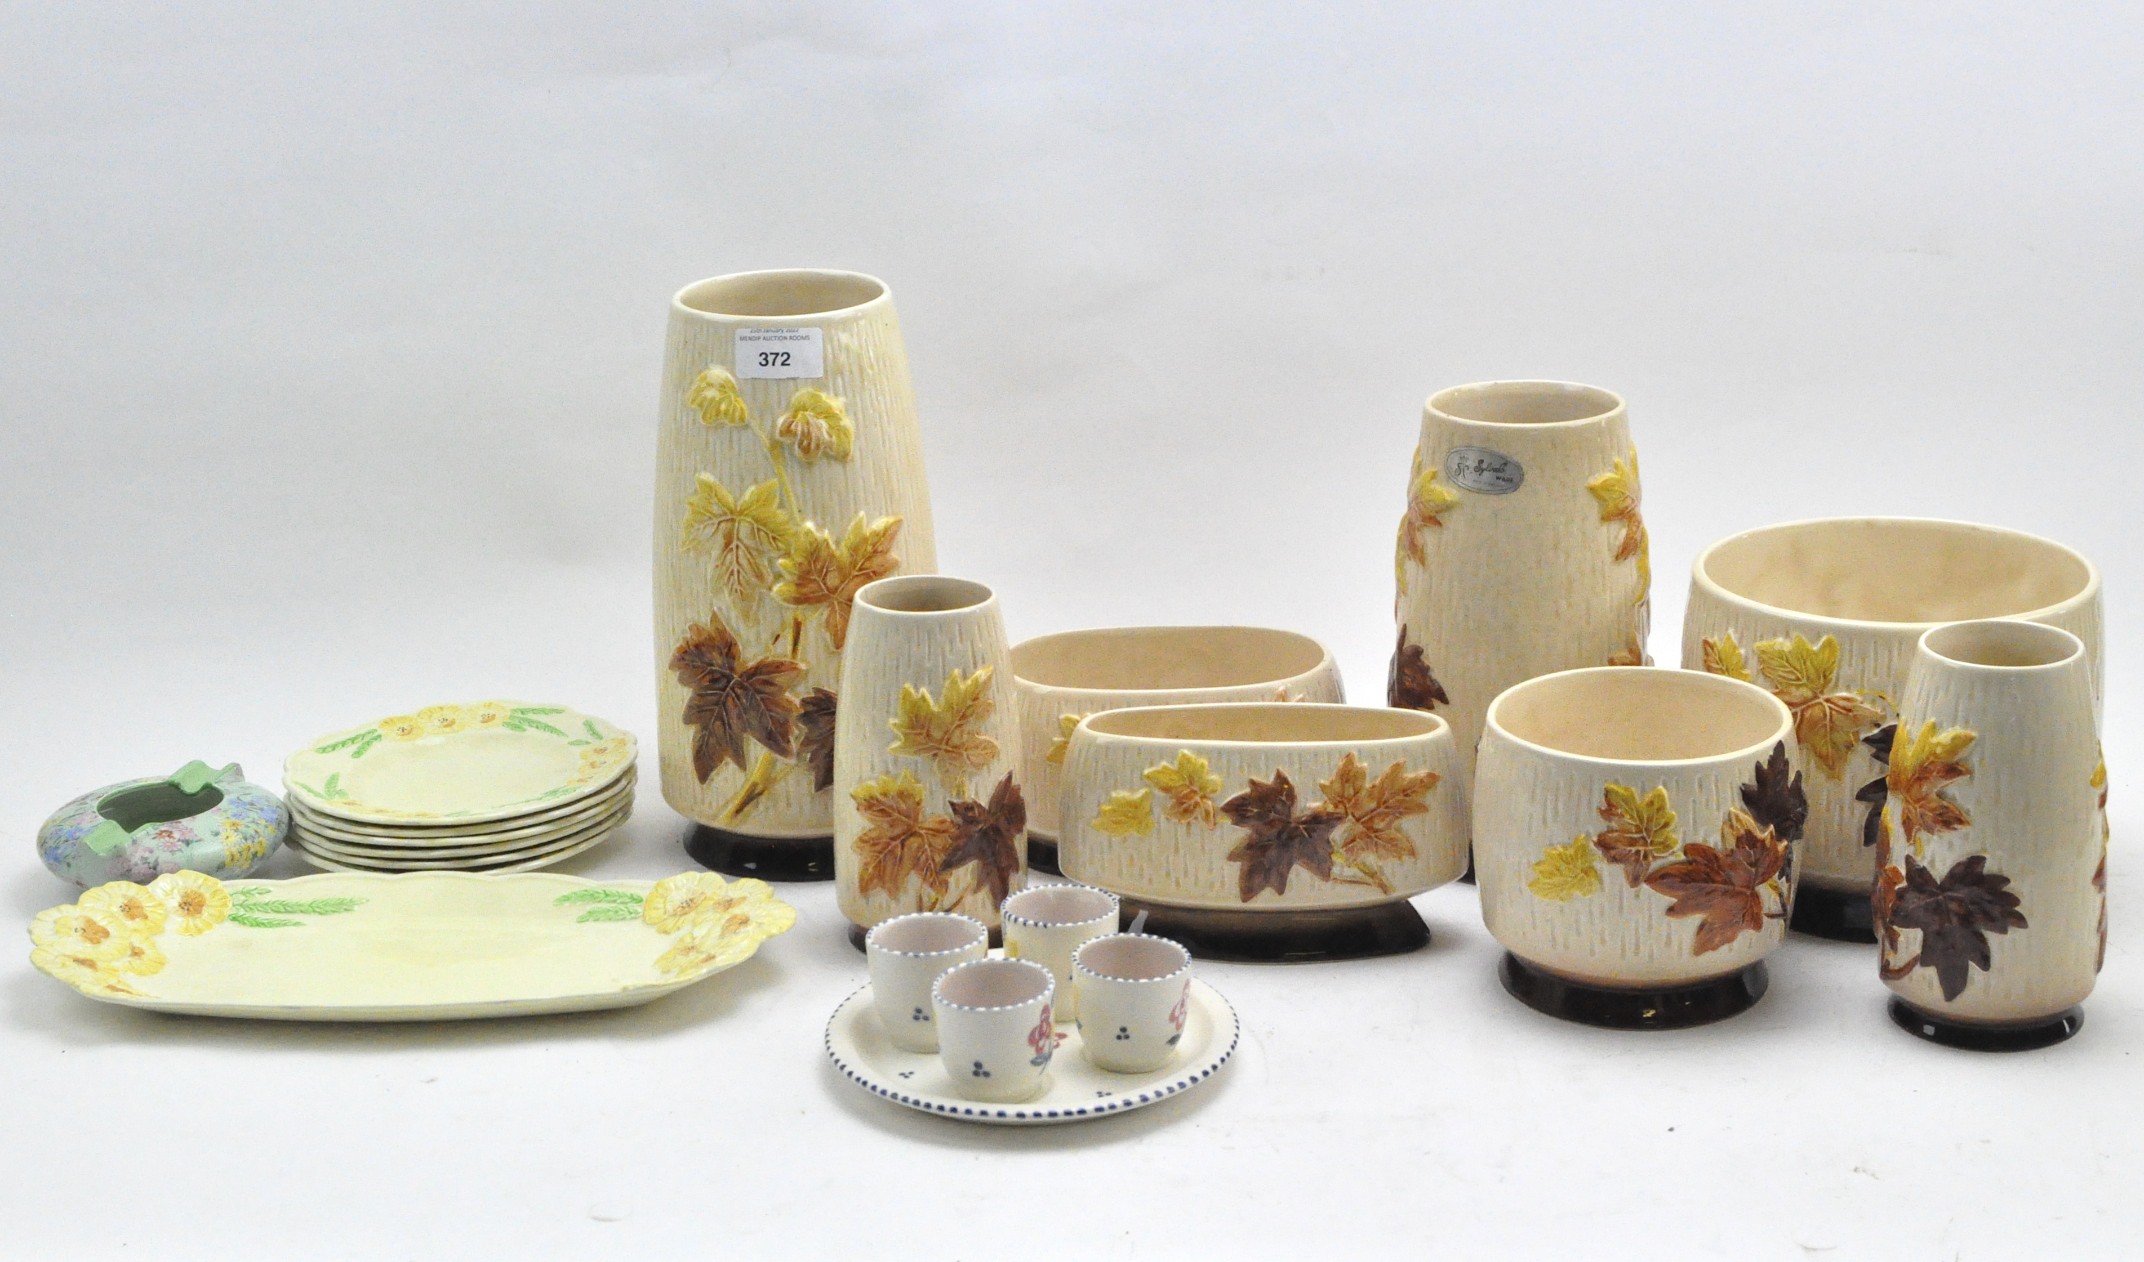 An assortment of ceramics, including Sylvac and Shelley